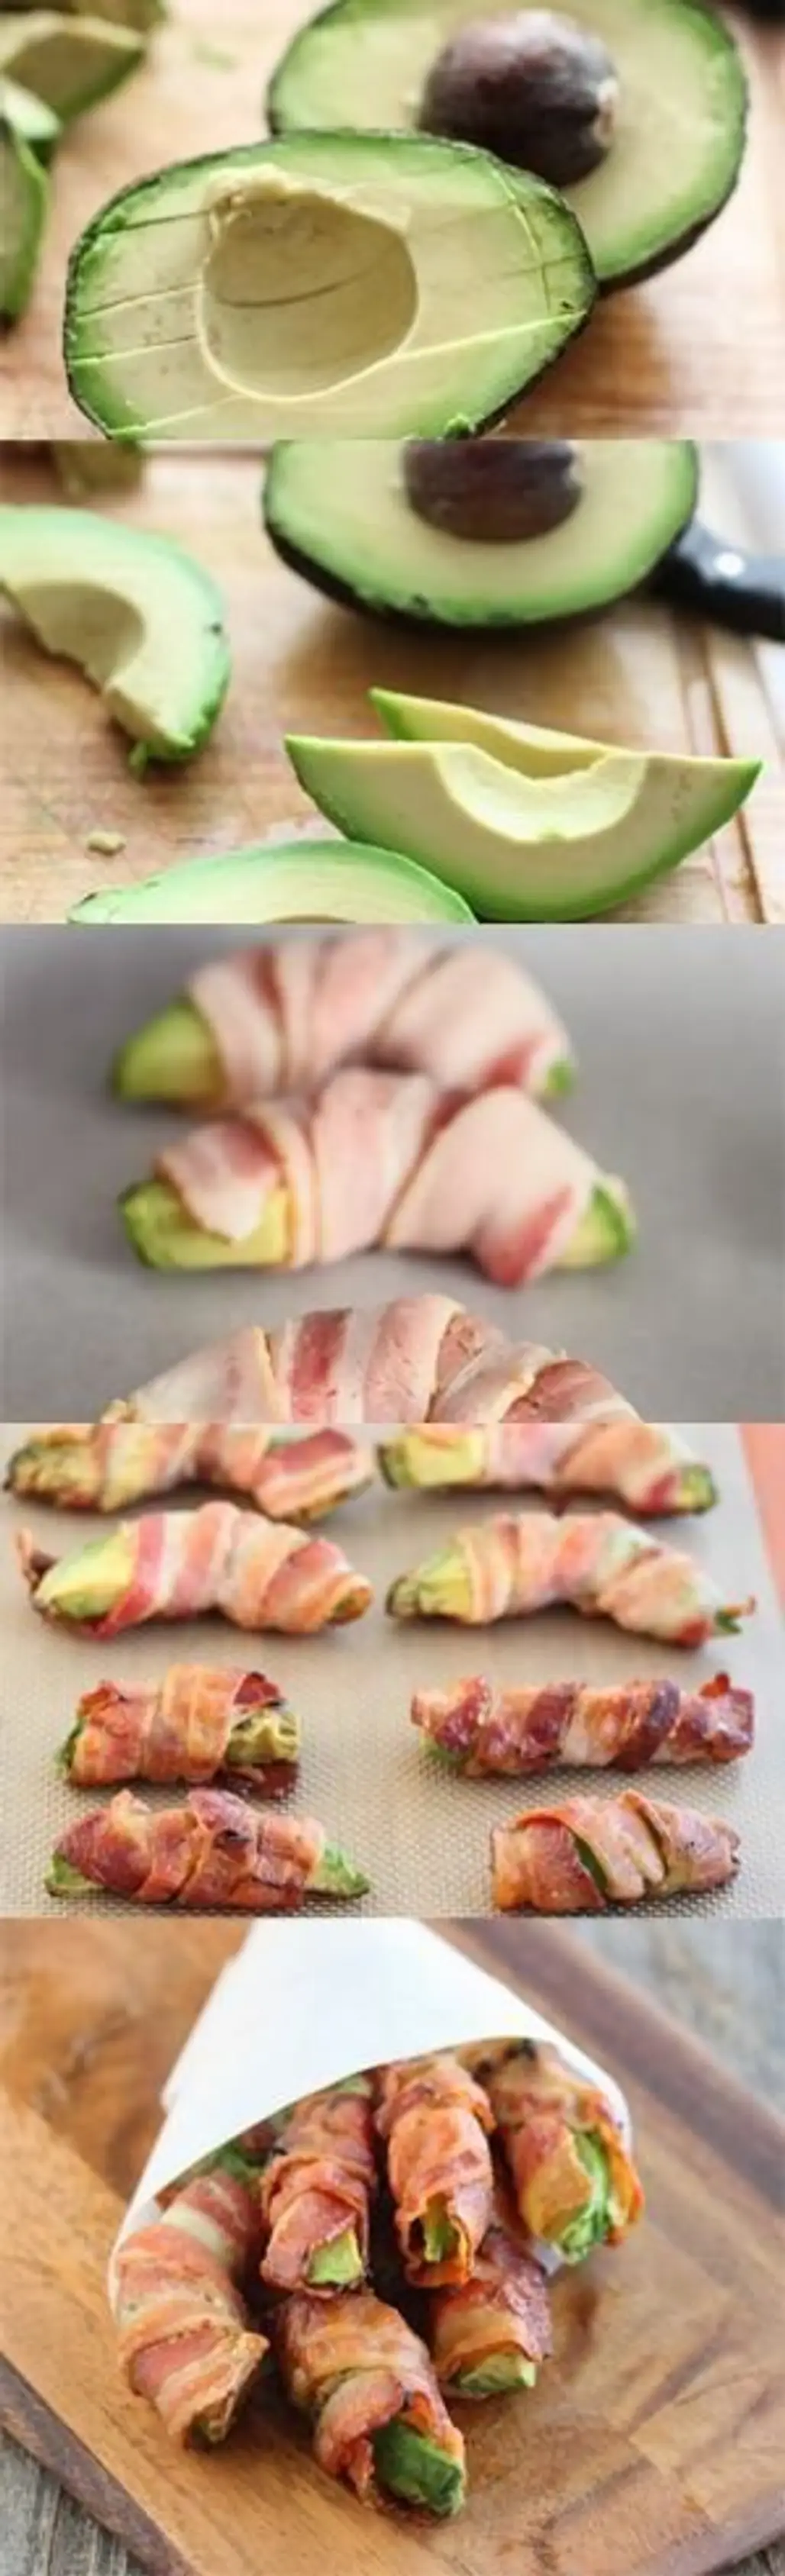 Amazing Bacon Wrapped Avocado Fries